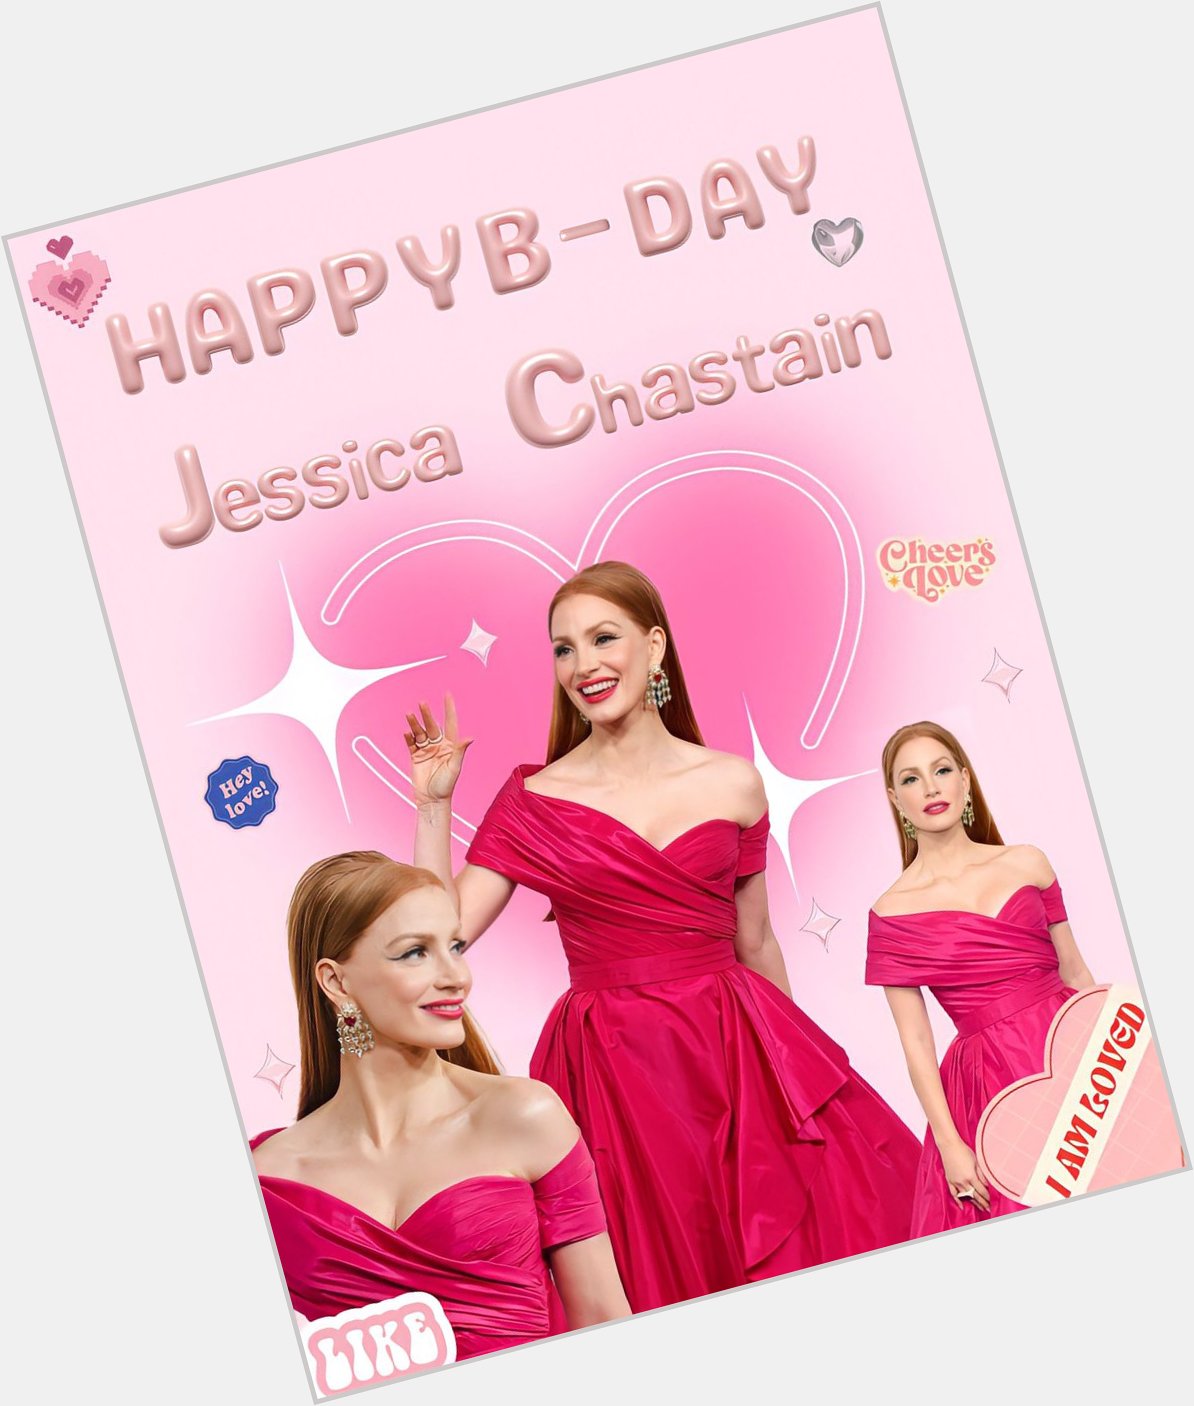 Happy Birthday To My Angel Jessica Chastain       